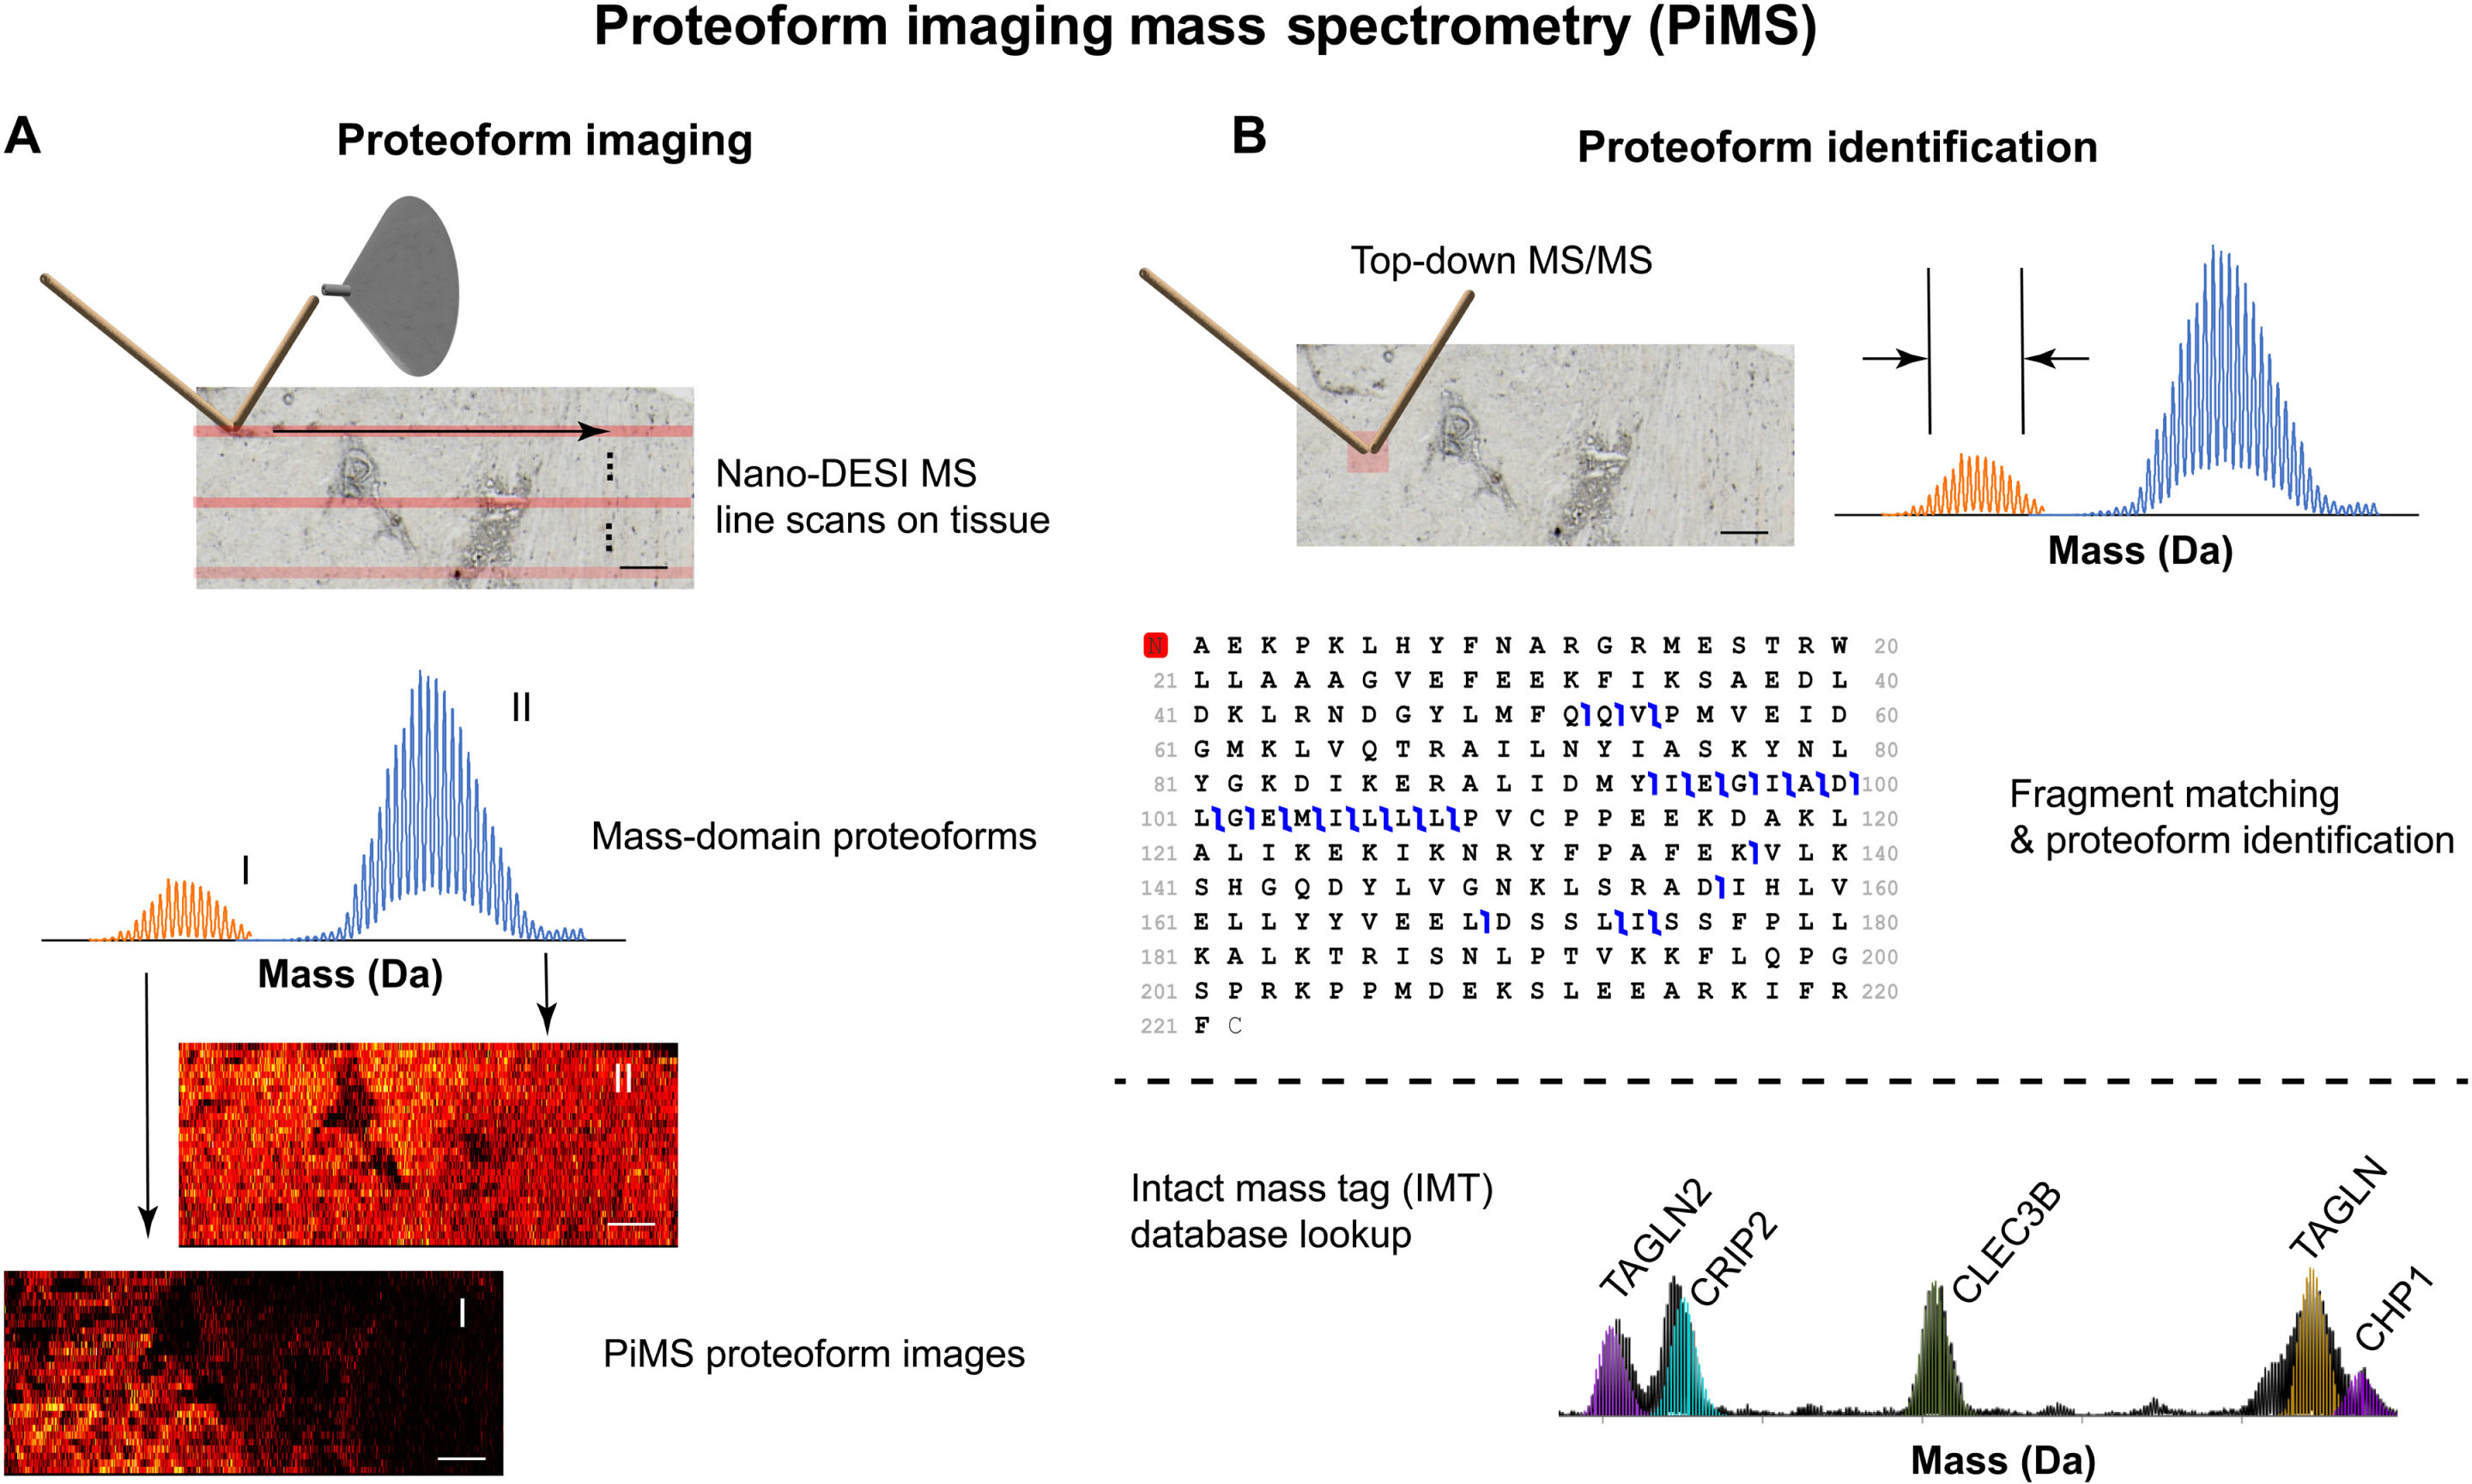 New technique improves proteoform imaging in human tissue